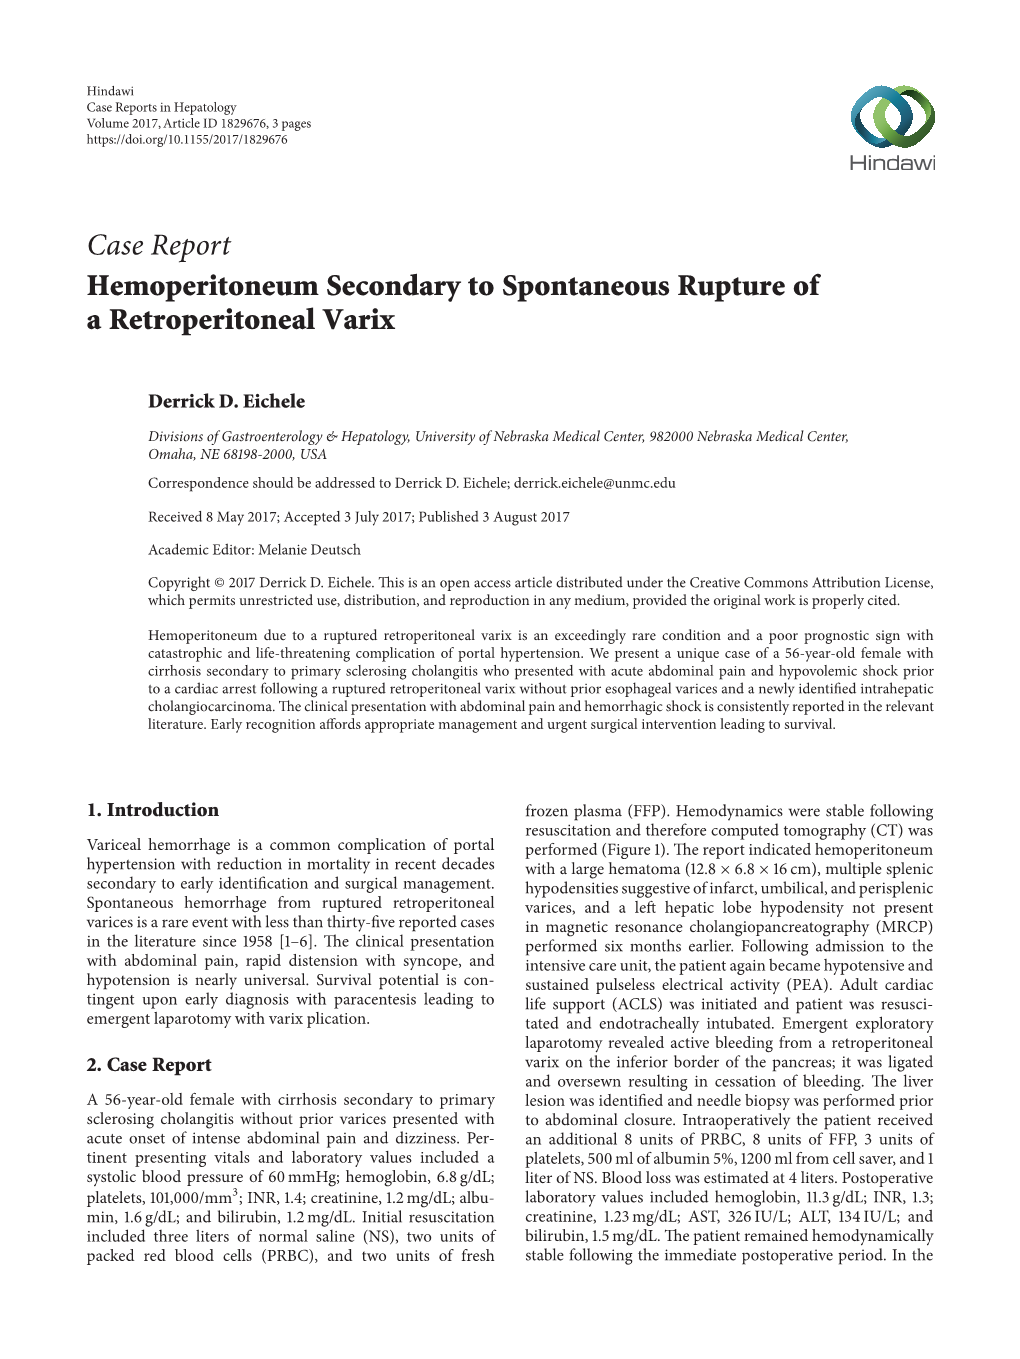 Case Report Hemoperitoneum Secondary to Spontaneous Rupture of a Retroperitoneal Varix